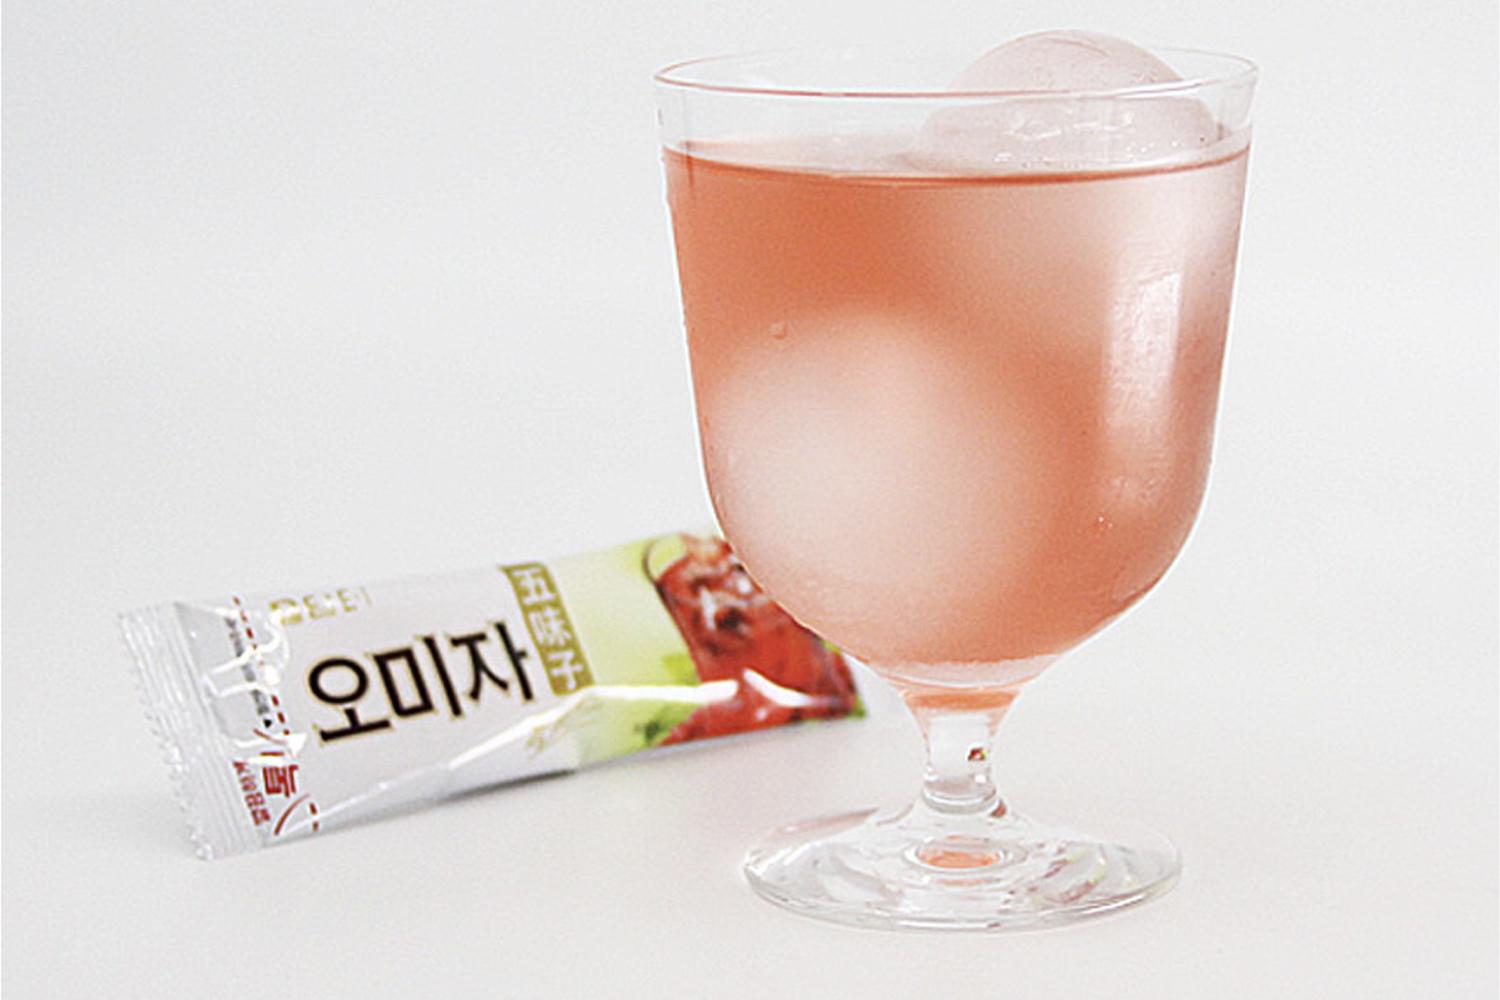 Korean brand damtuh's Omija Plus Tea made into an iced drink in glass